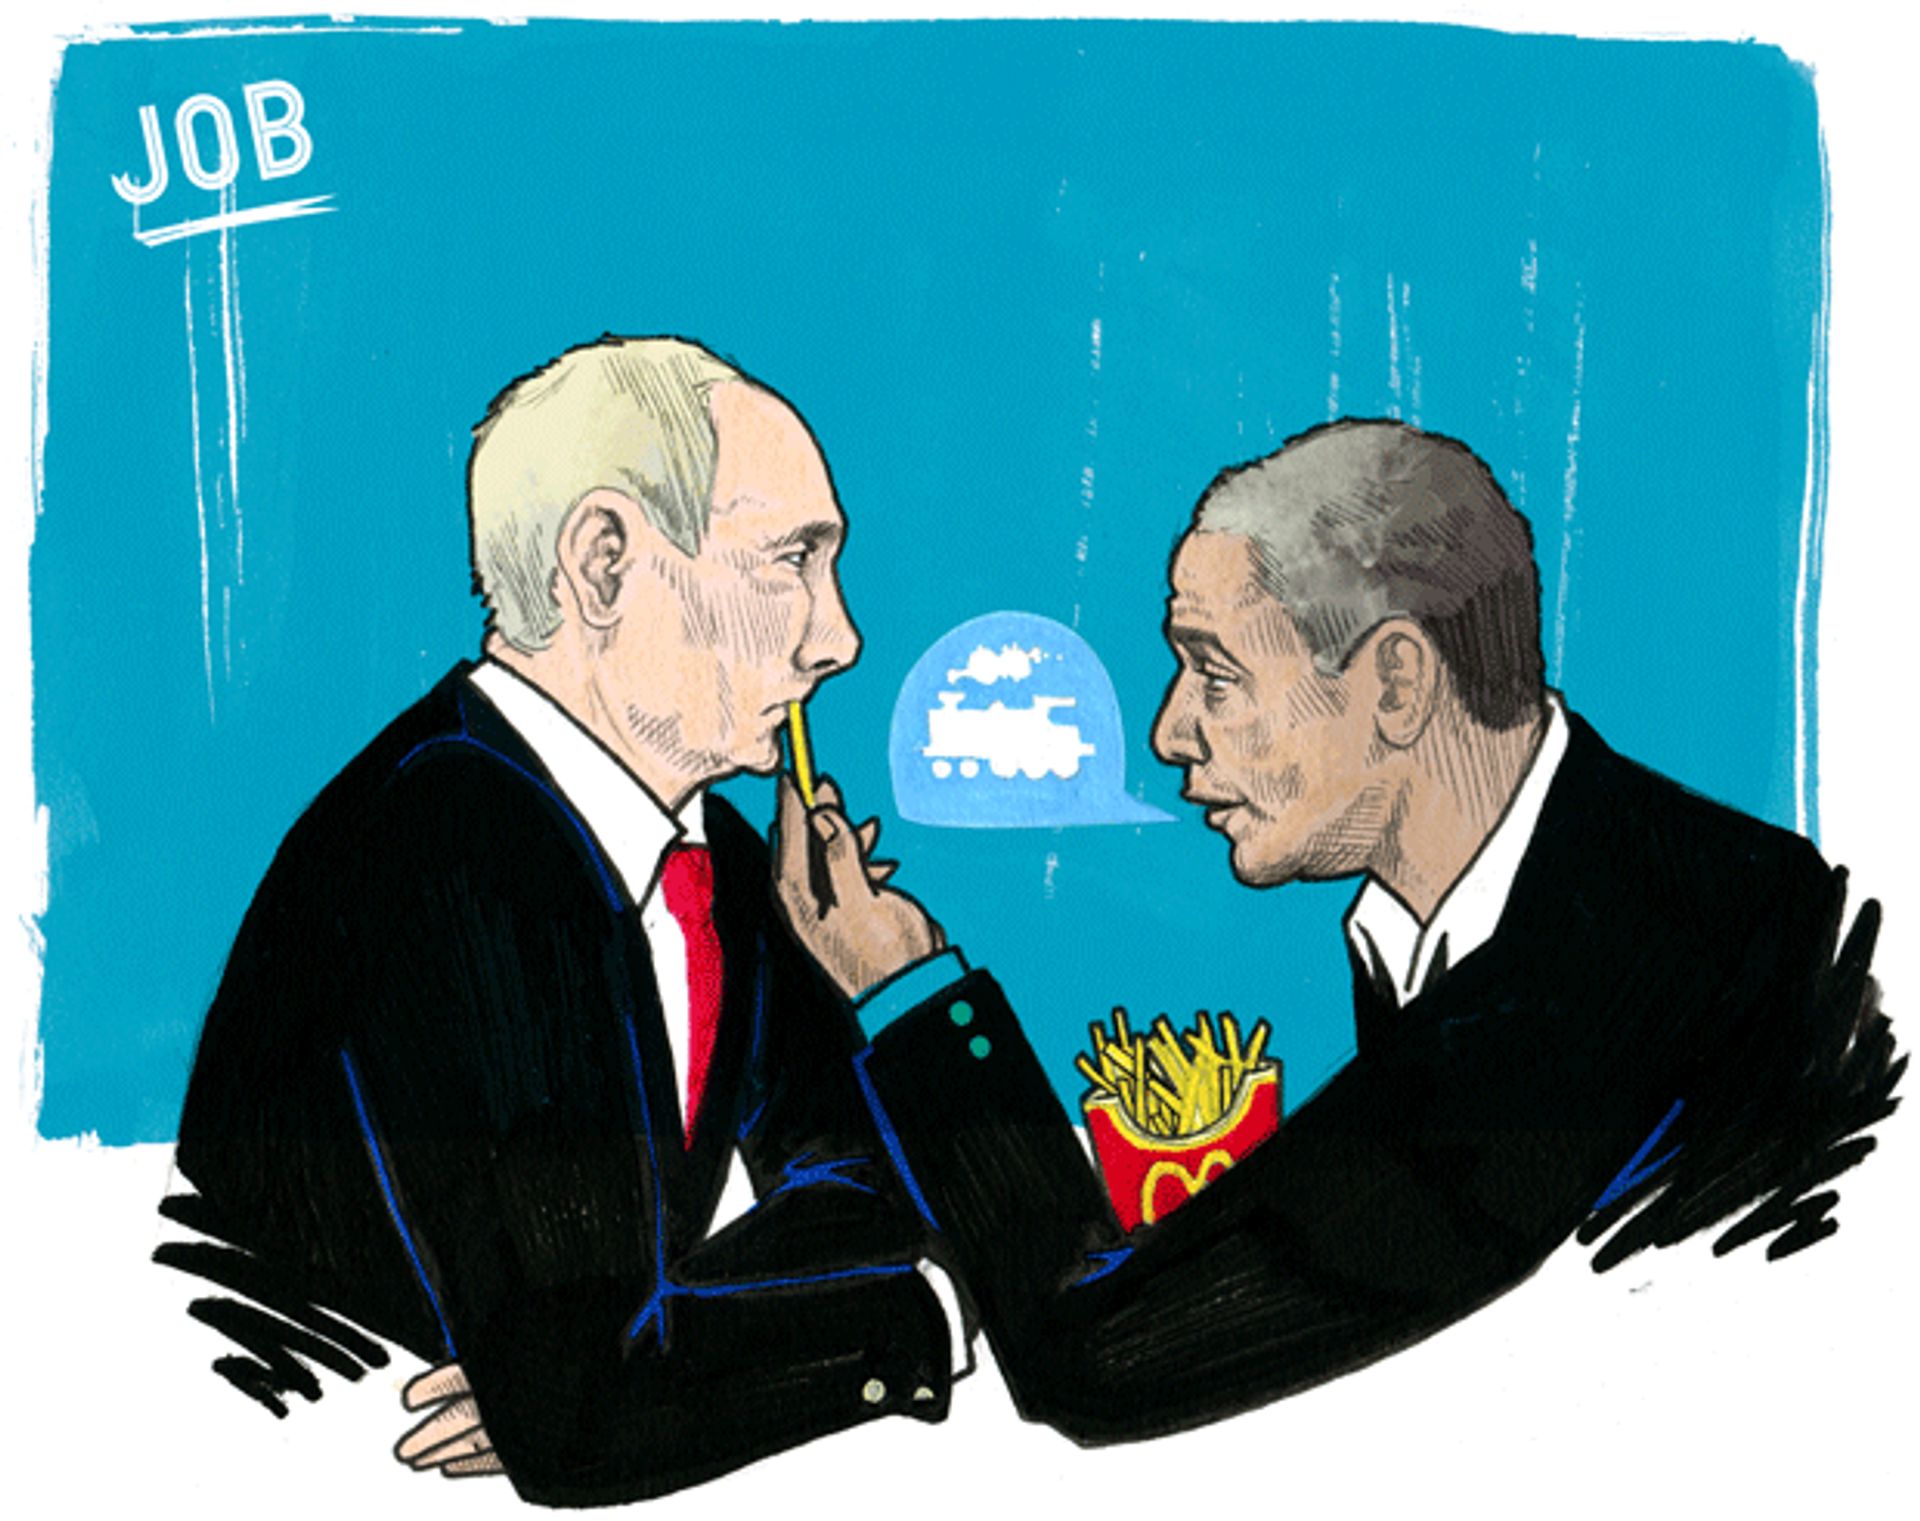 RTEmagicC_Job_Poetin.jpg.jpg